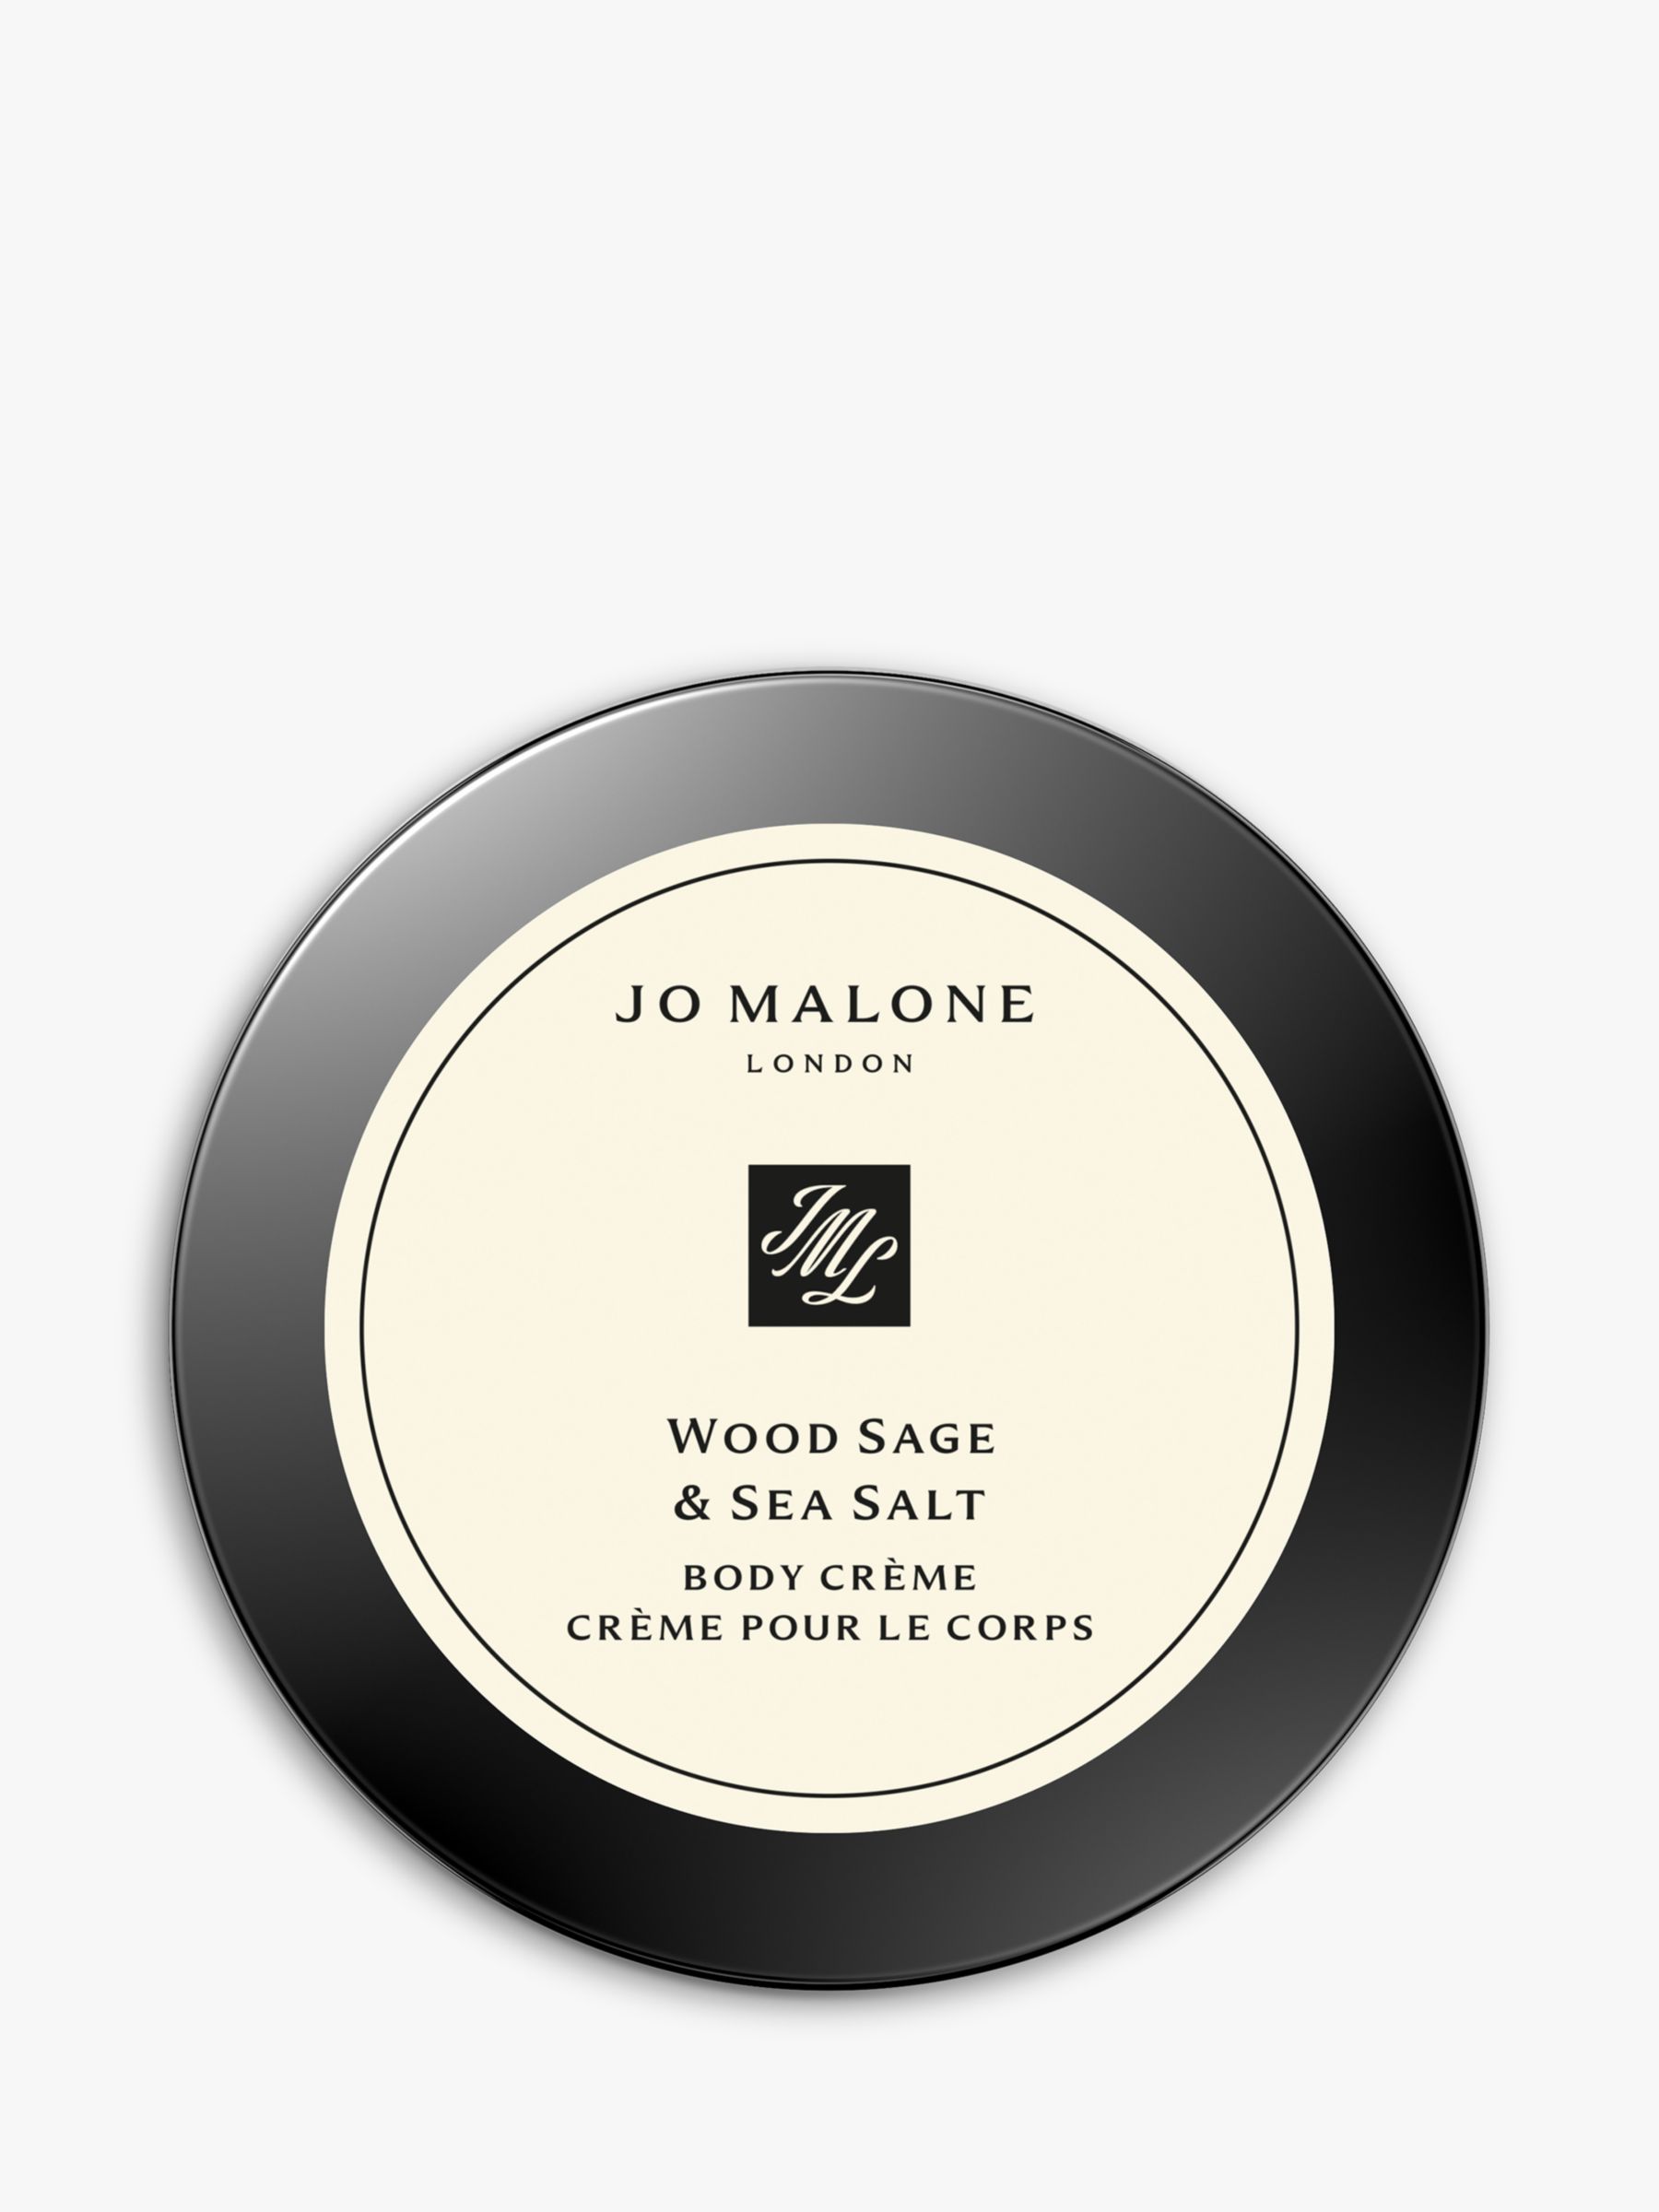 Jo Malone London Wood Sage & Sea Salt Body Crème, 50ml 1